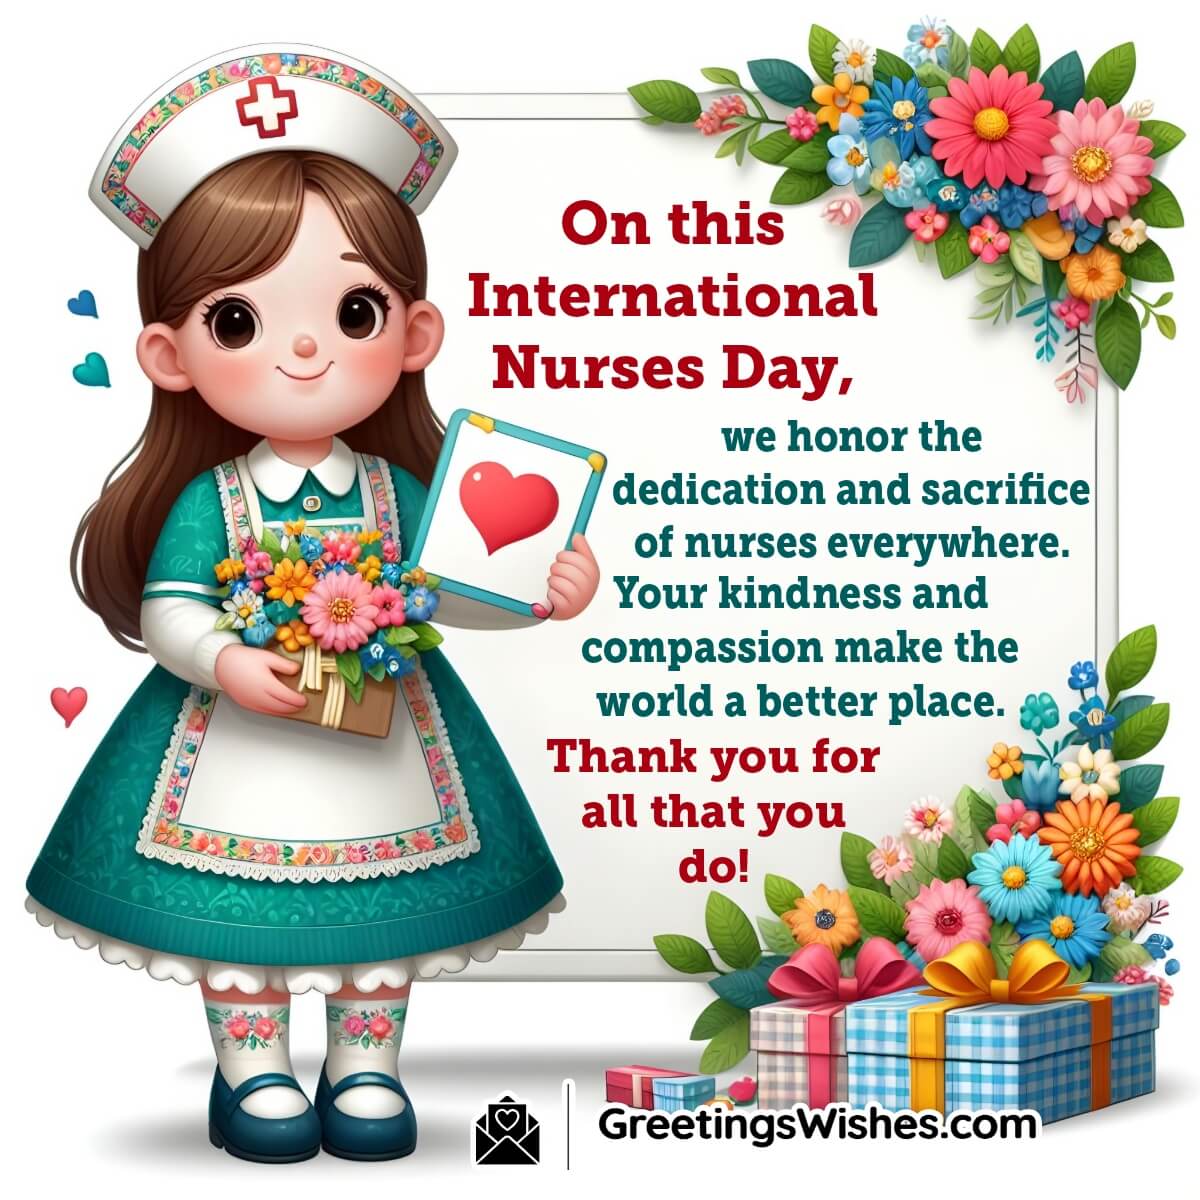 International Nurses Day Thank You Message